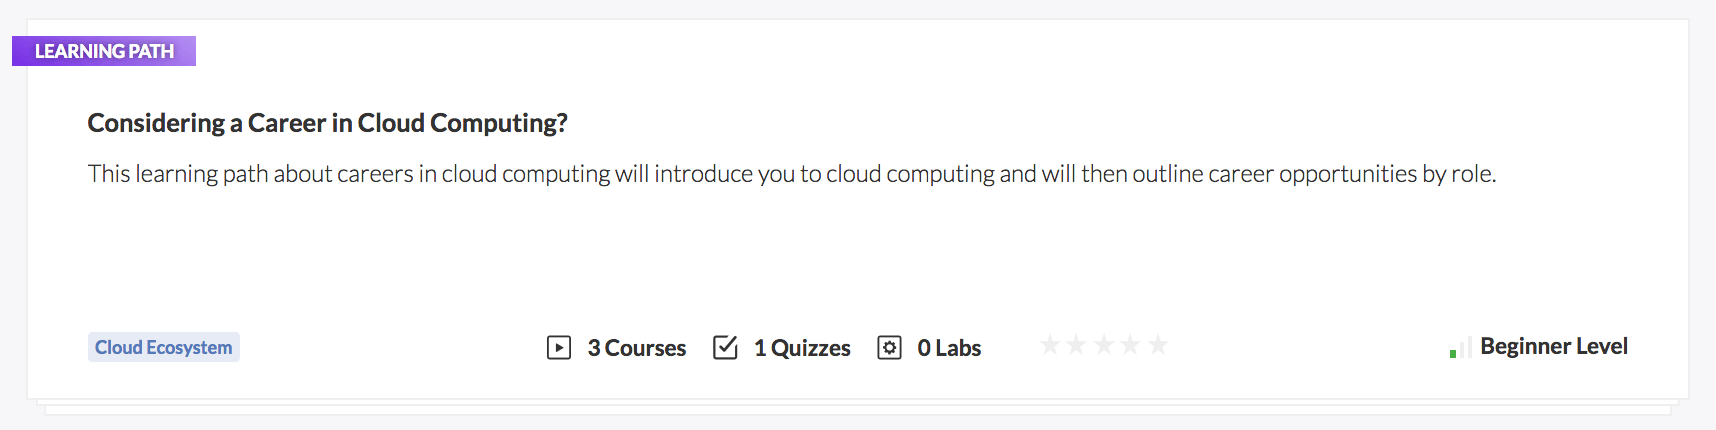 Cloud Computing Career